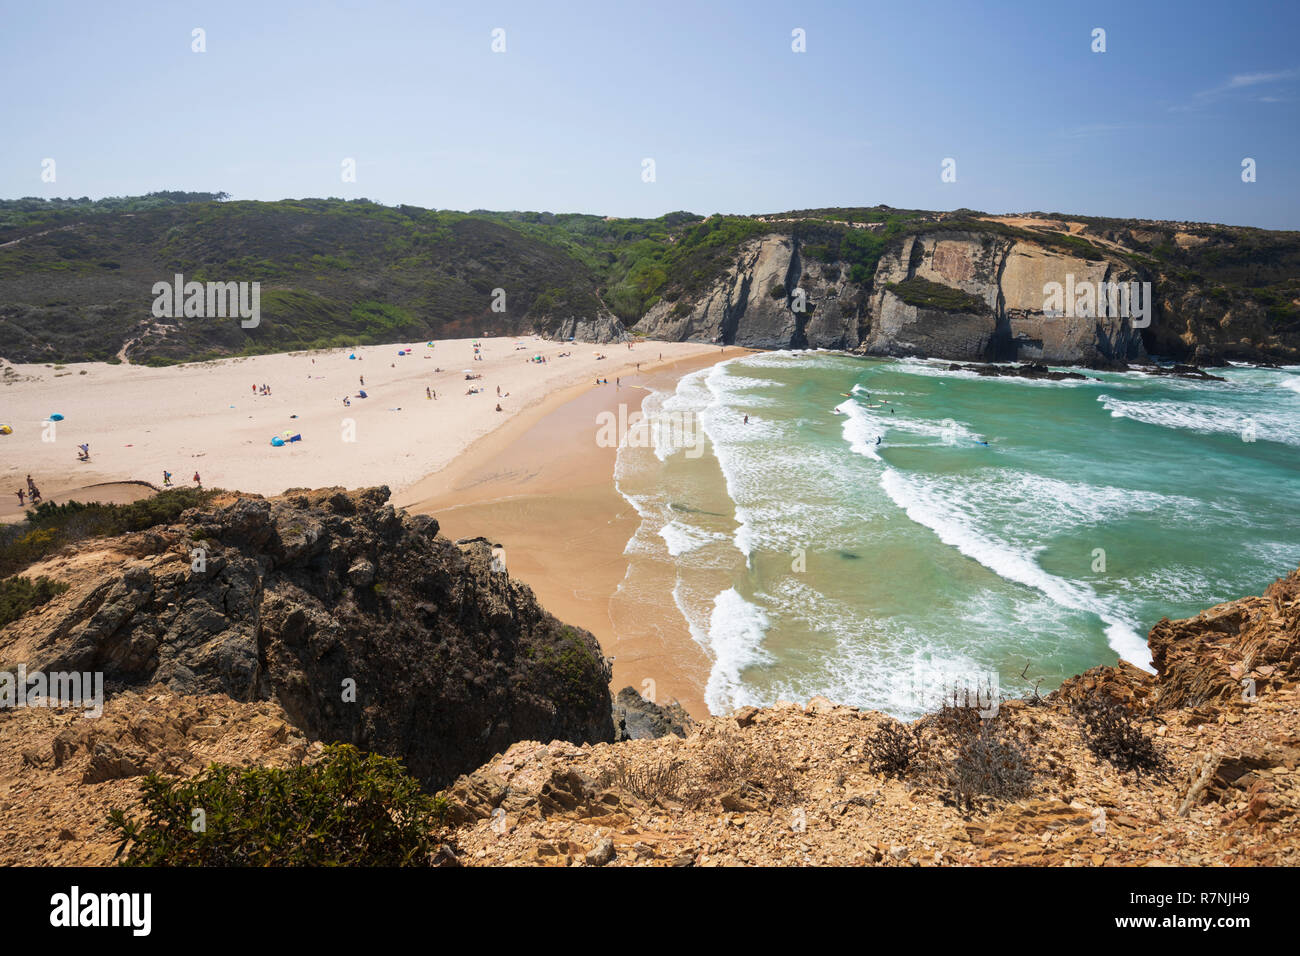 Praia do Carvalhal with breaking Atlantic waves in the afternoon sun, Zambujeira do Mar, Alentejo region, Portugal, Europe Stock Photo